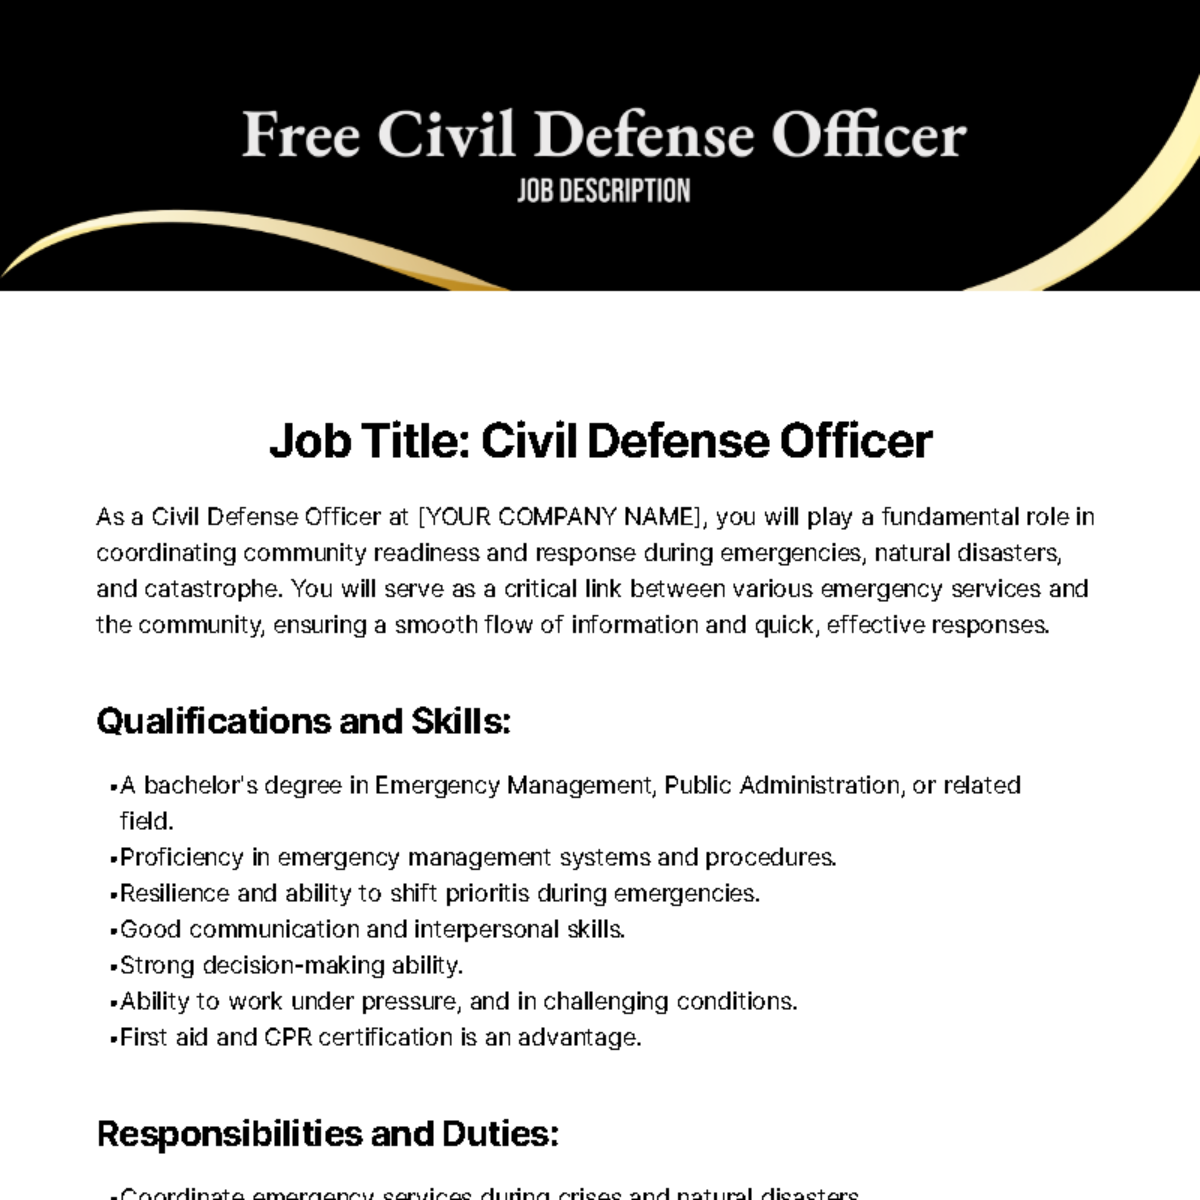 Free Civil Defense Officer Job Description Template